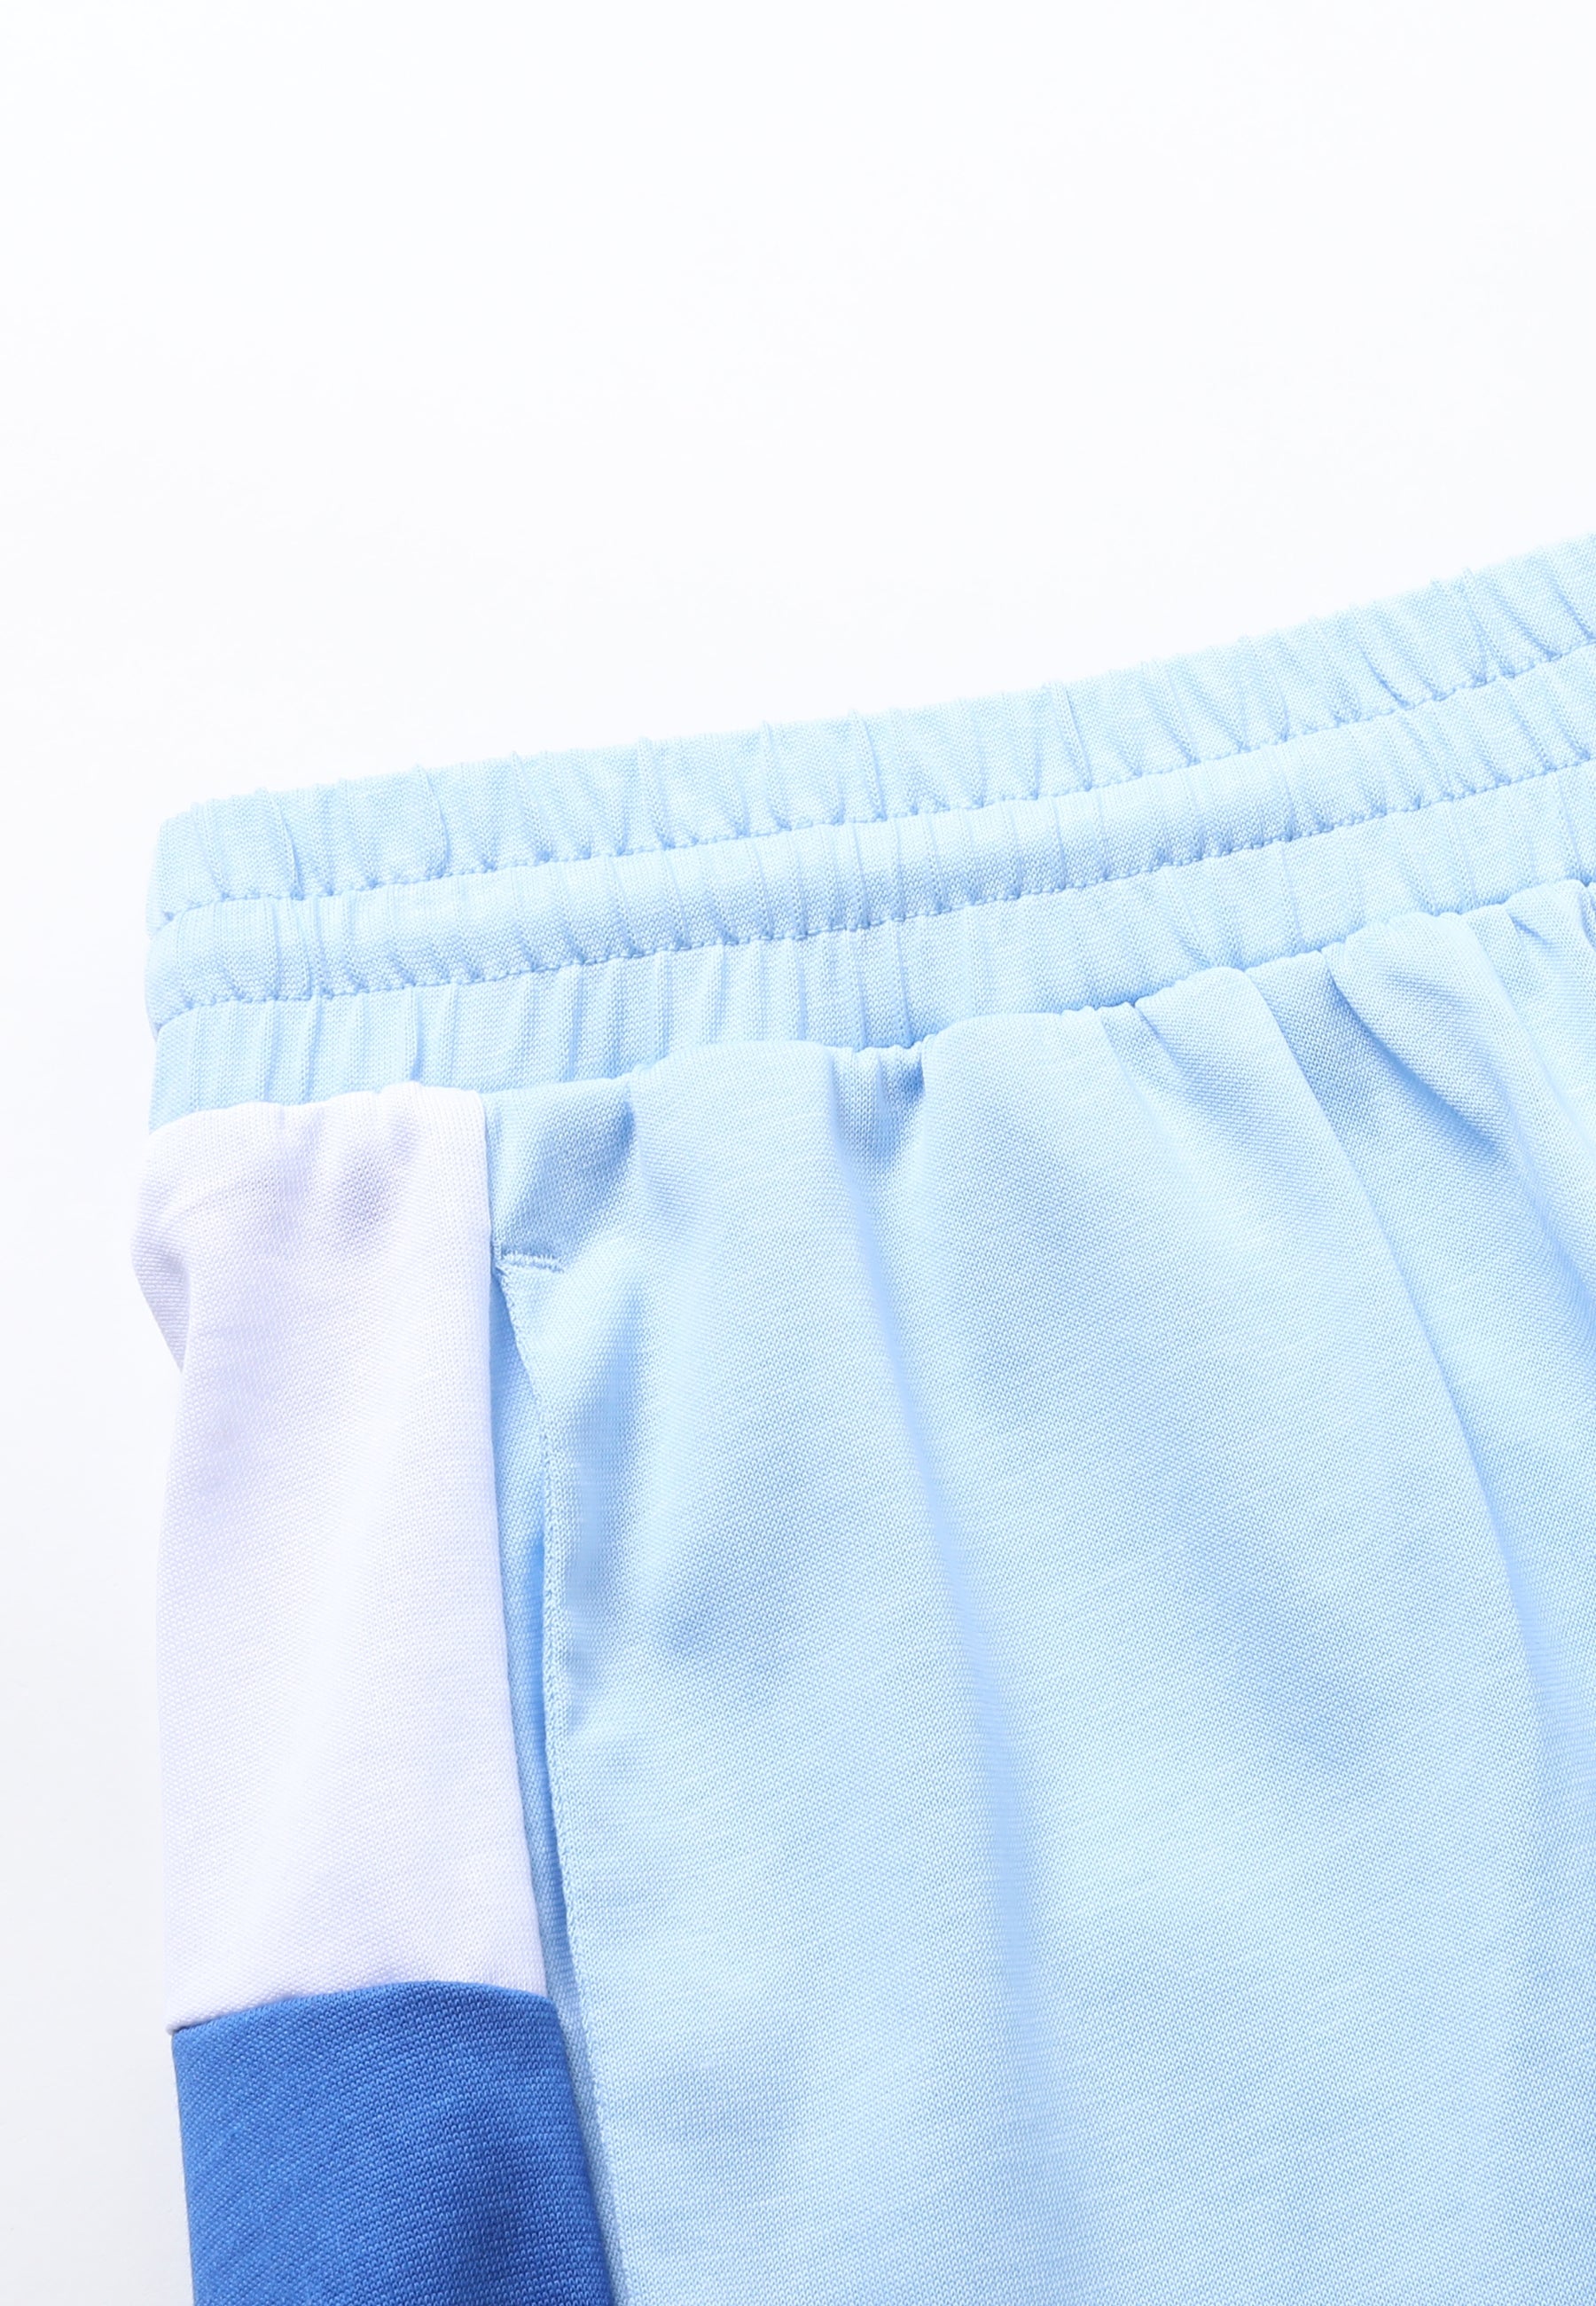 Men’s Two-Tone Cotton Shorts